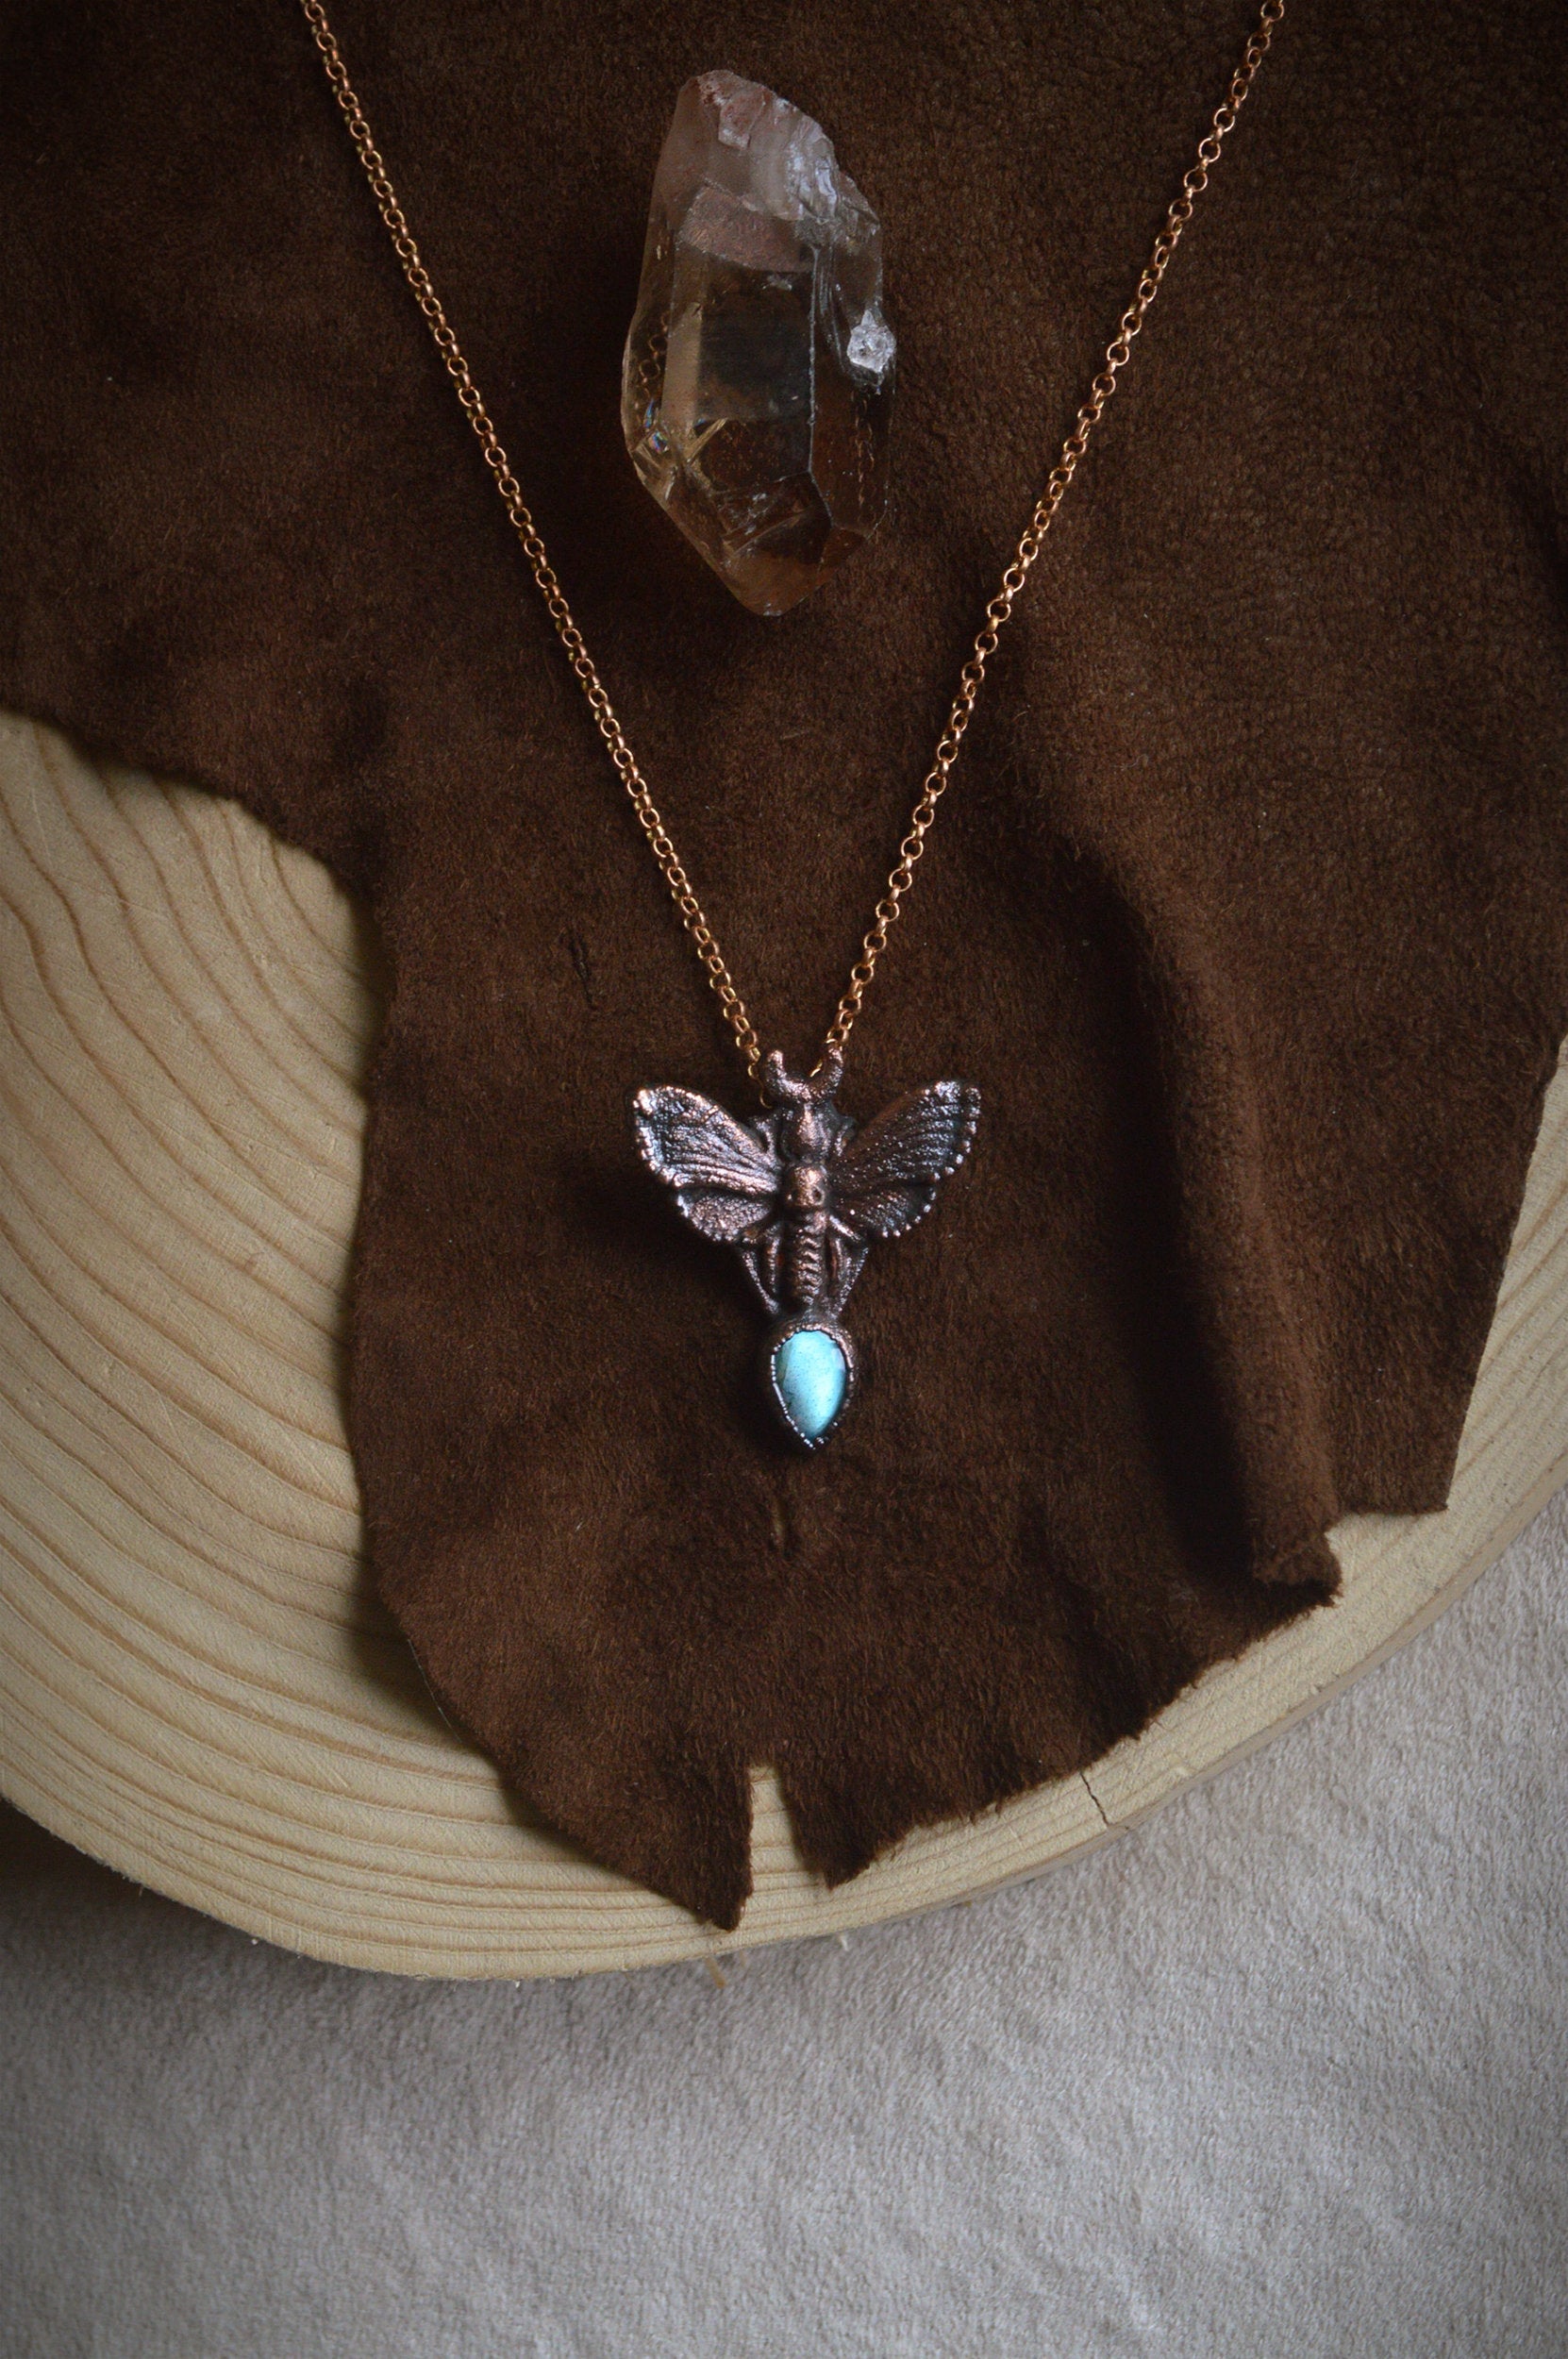 Dainty moth copper necklace with flashy labradorite stone. Witchy boho magic jewellery